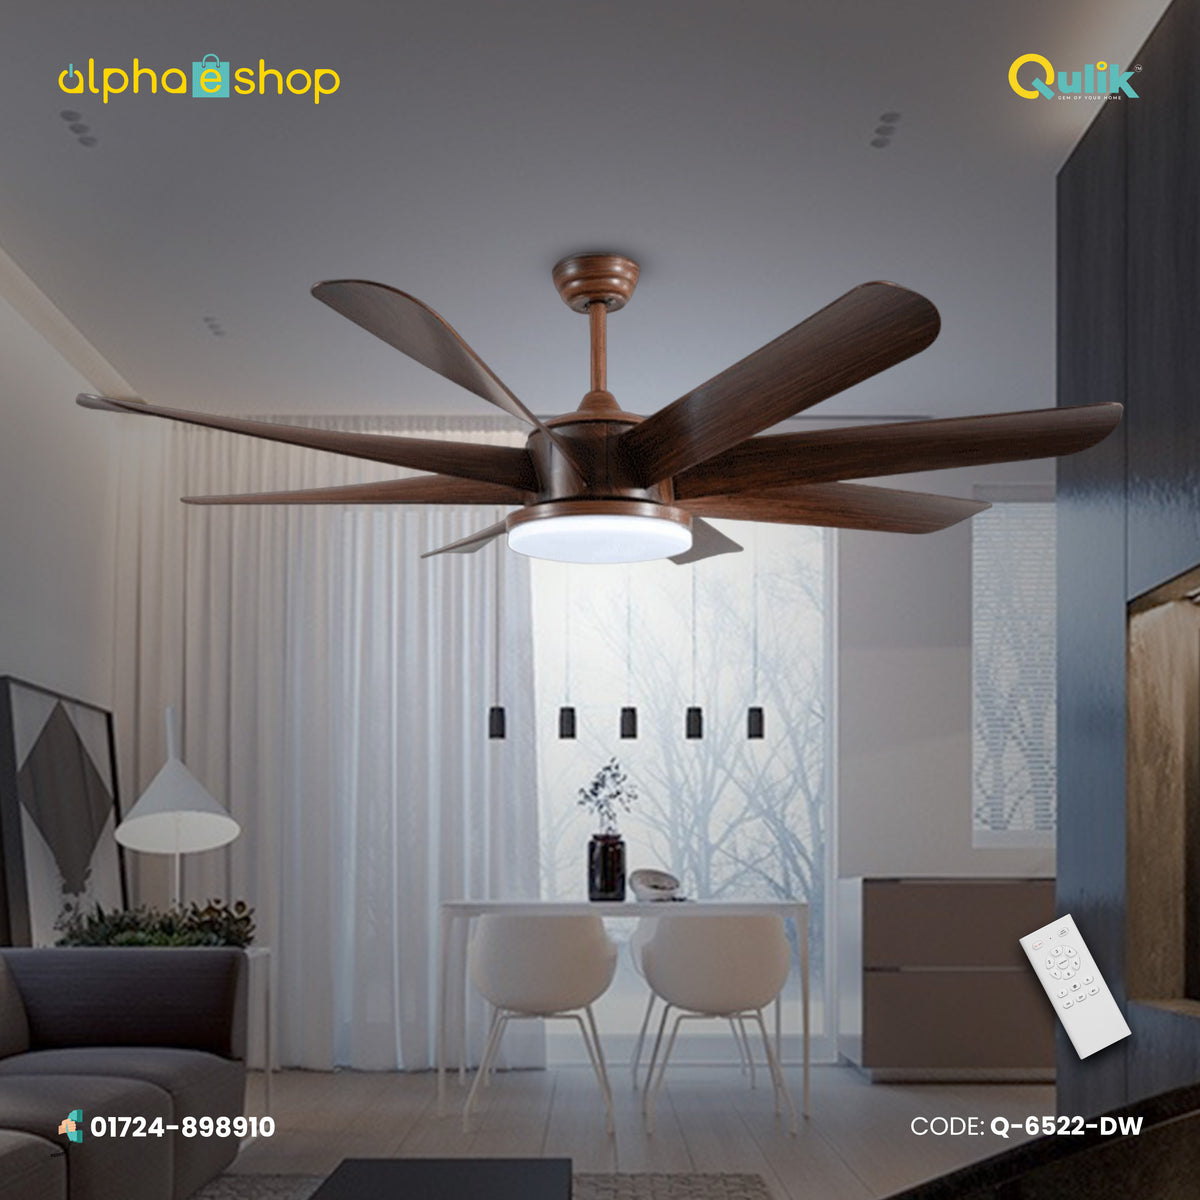 Qulik 60 Inch Modern Decorative Silent ABS Blade Under light with Remote Ceiling Fan (DarK Wood) Q-6522-DW